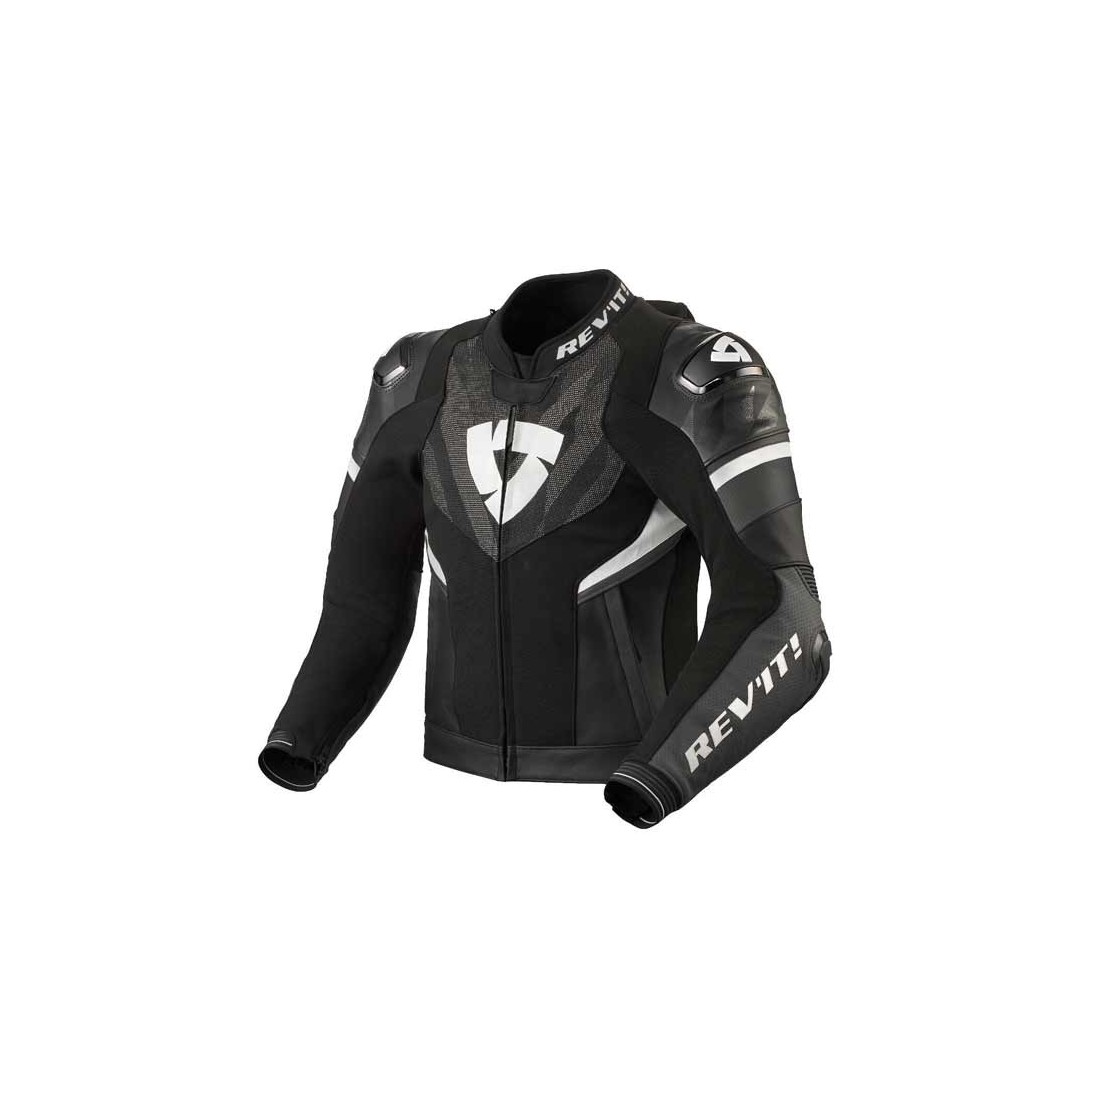 Revit Hyperspeed 2 Pro black anthracite jacket